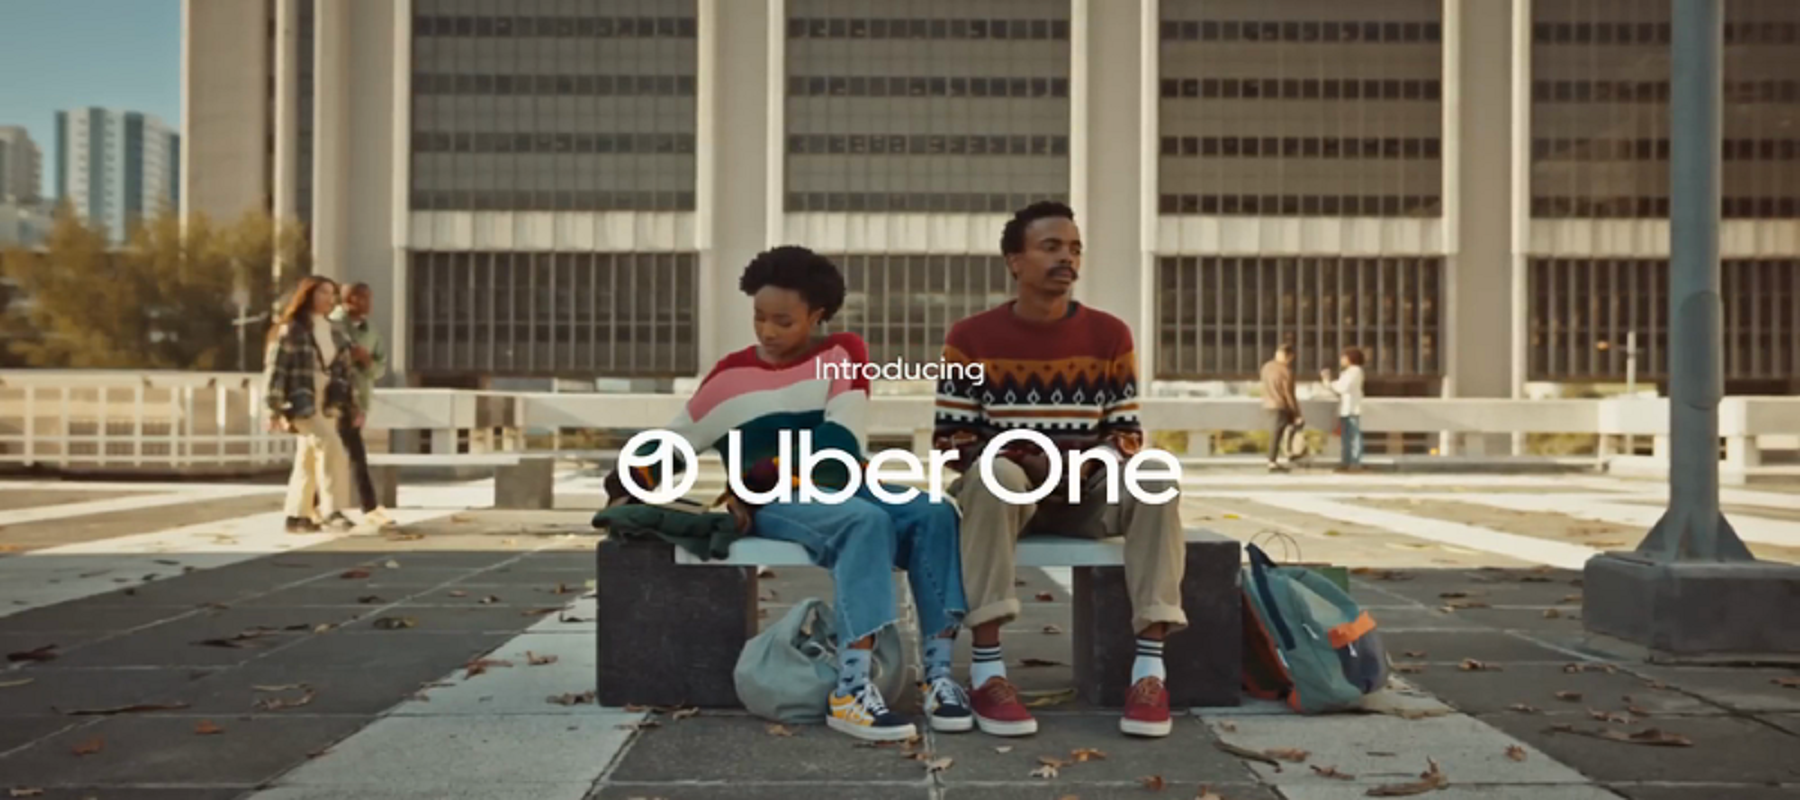 Joe Public Cape Town launches Uber One campaign